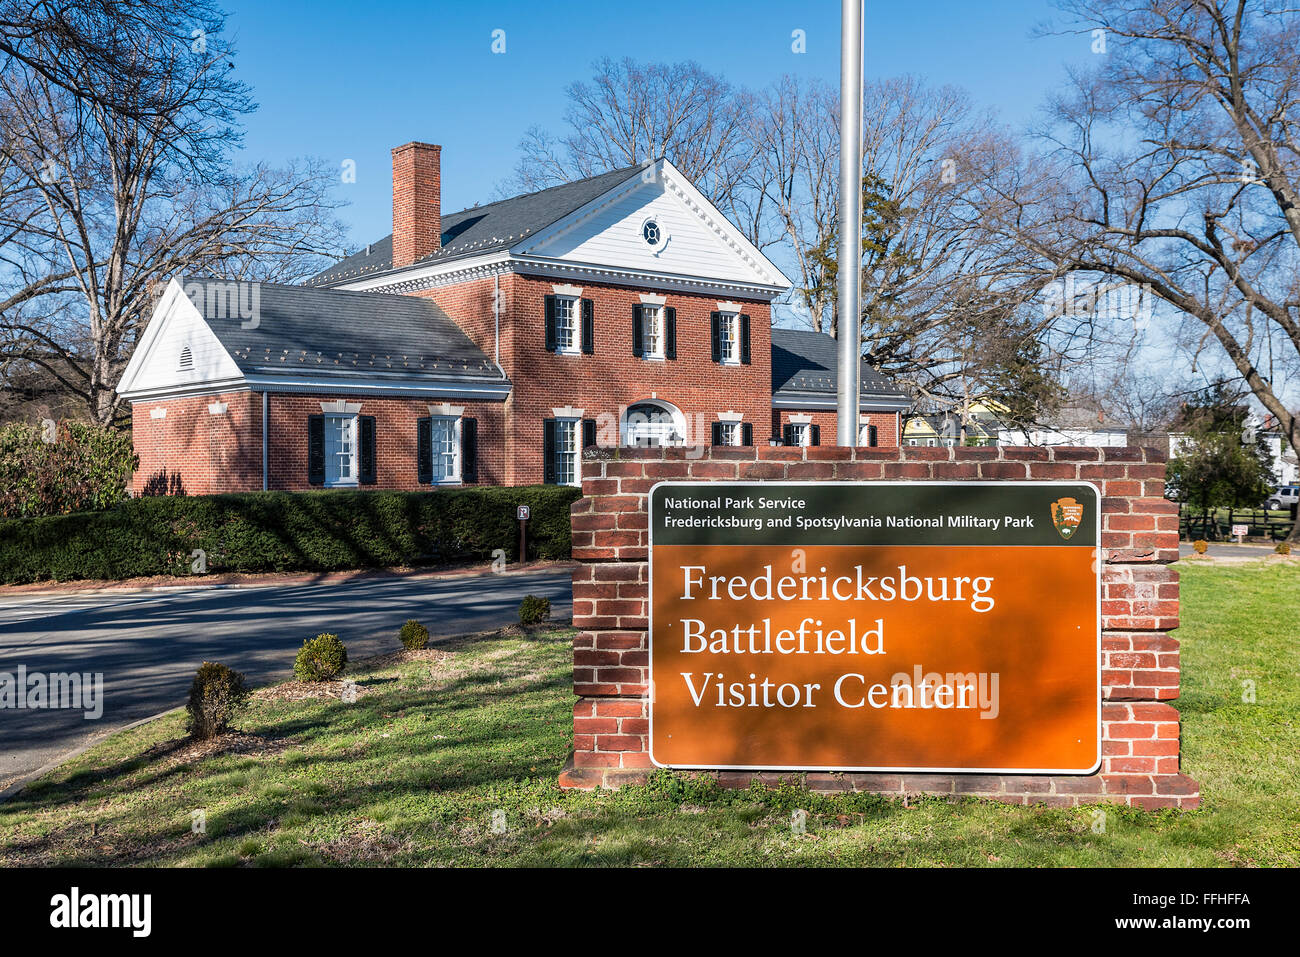 Fredericksburg Battlefield National Military Park, Fredericksburg, Virginia, USA Banque D'Images